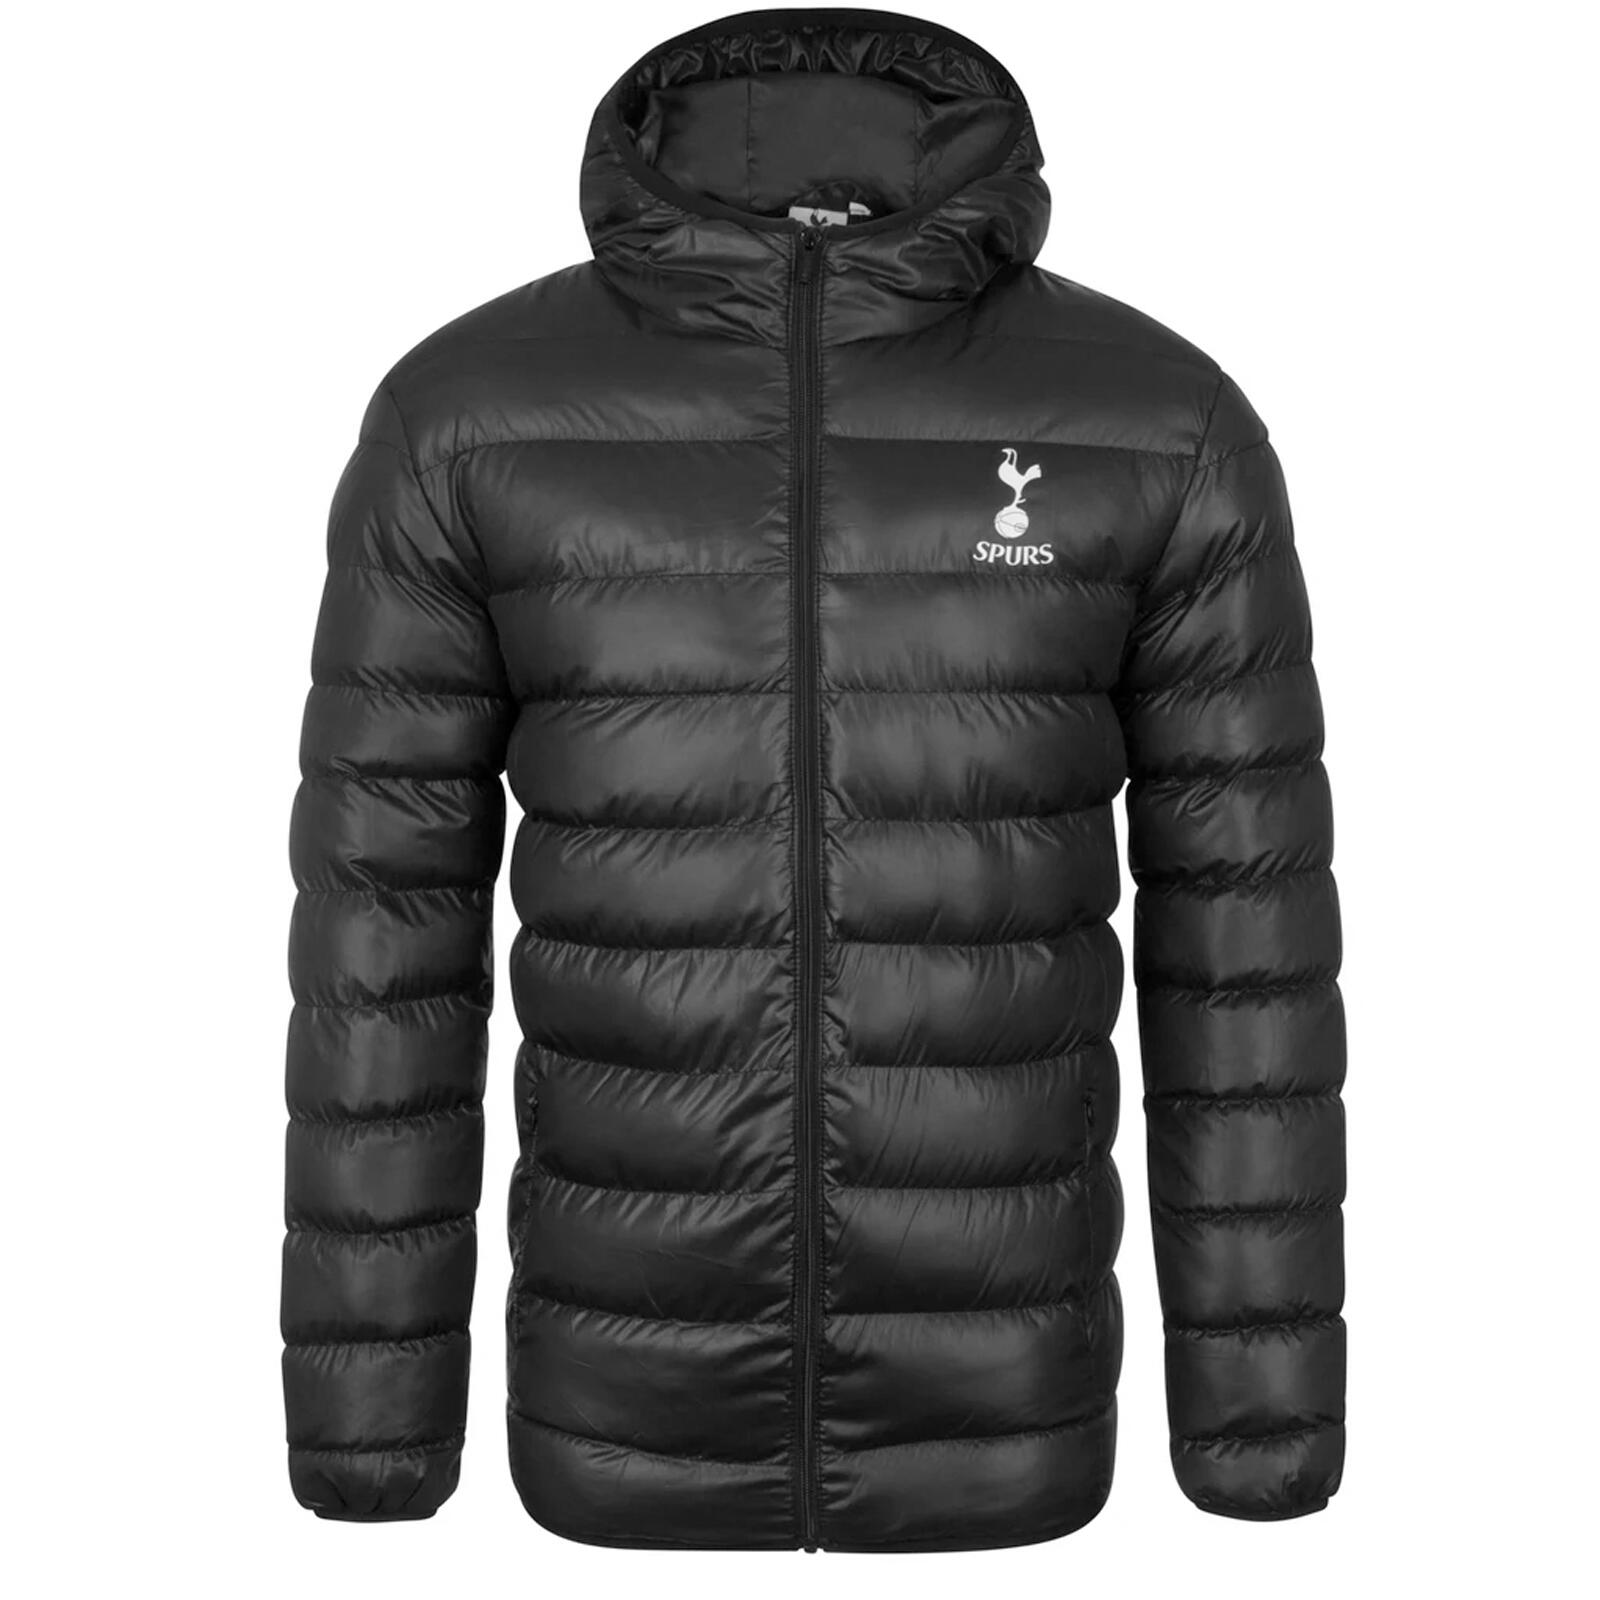 TOTTENHAM HOTSPUR Tottenham Hotspur Mens Jacket Hooded Winter Quilted OFFICIAL Football Gift